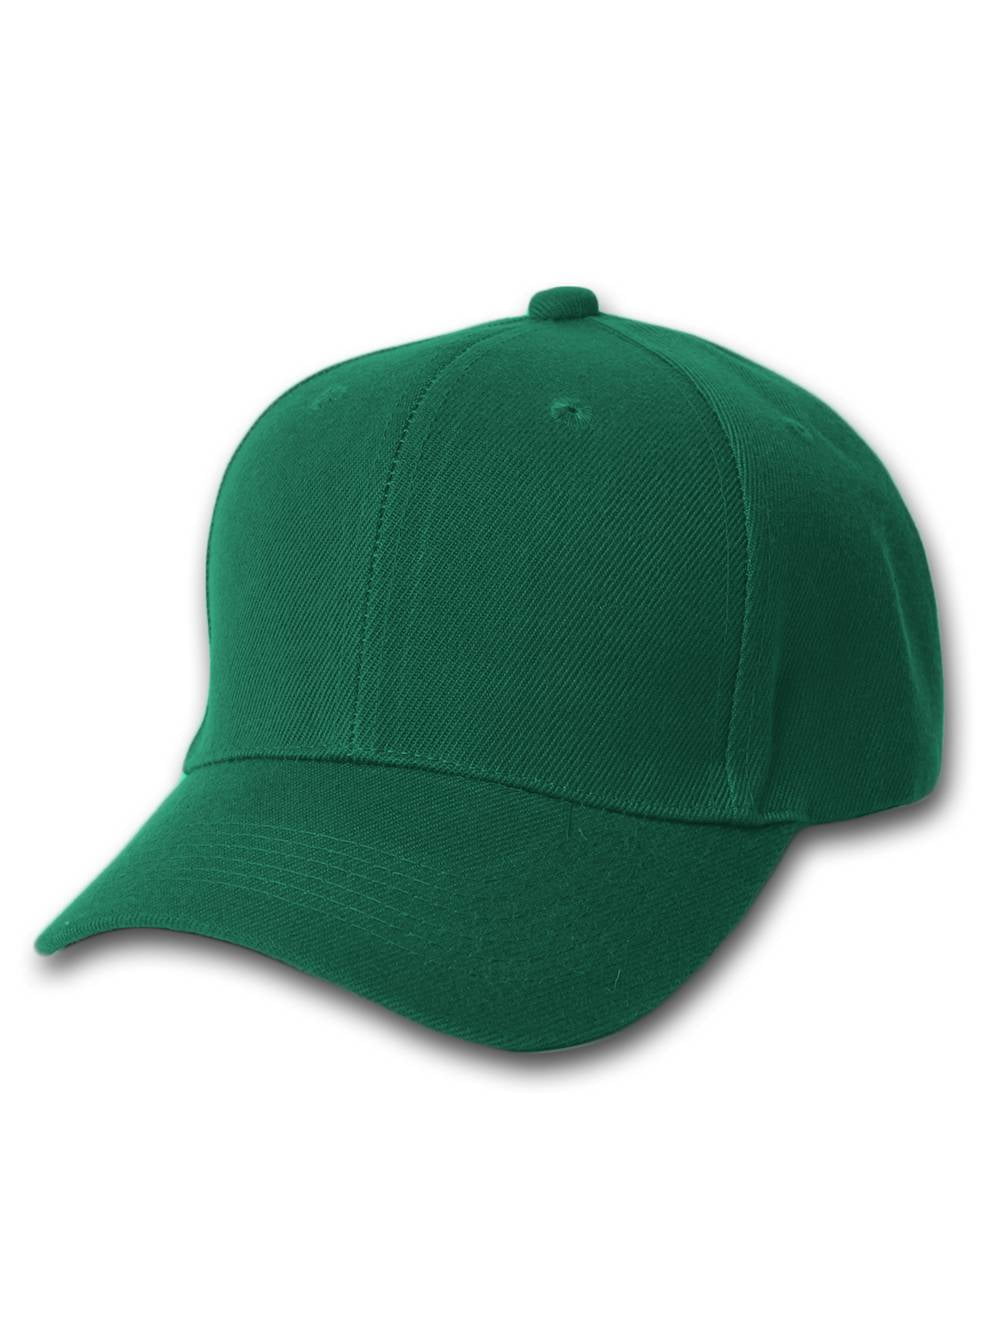 Jurassic Park Movie Logo Forest Green Sci fi Patch Khaki Snapback Cap Hat 